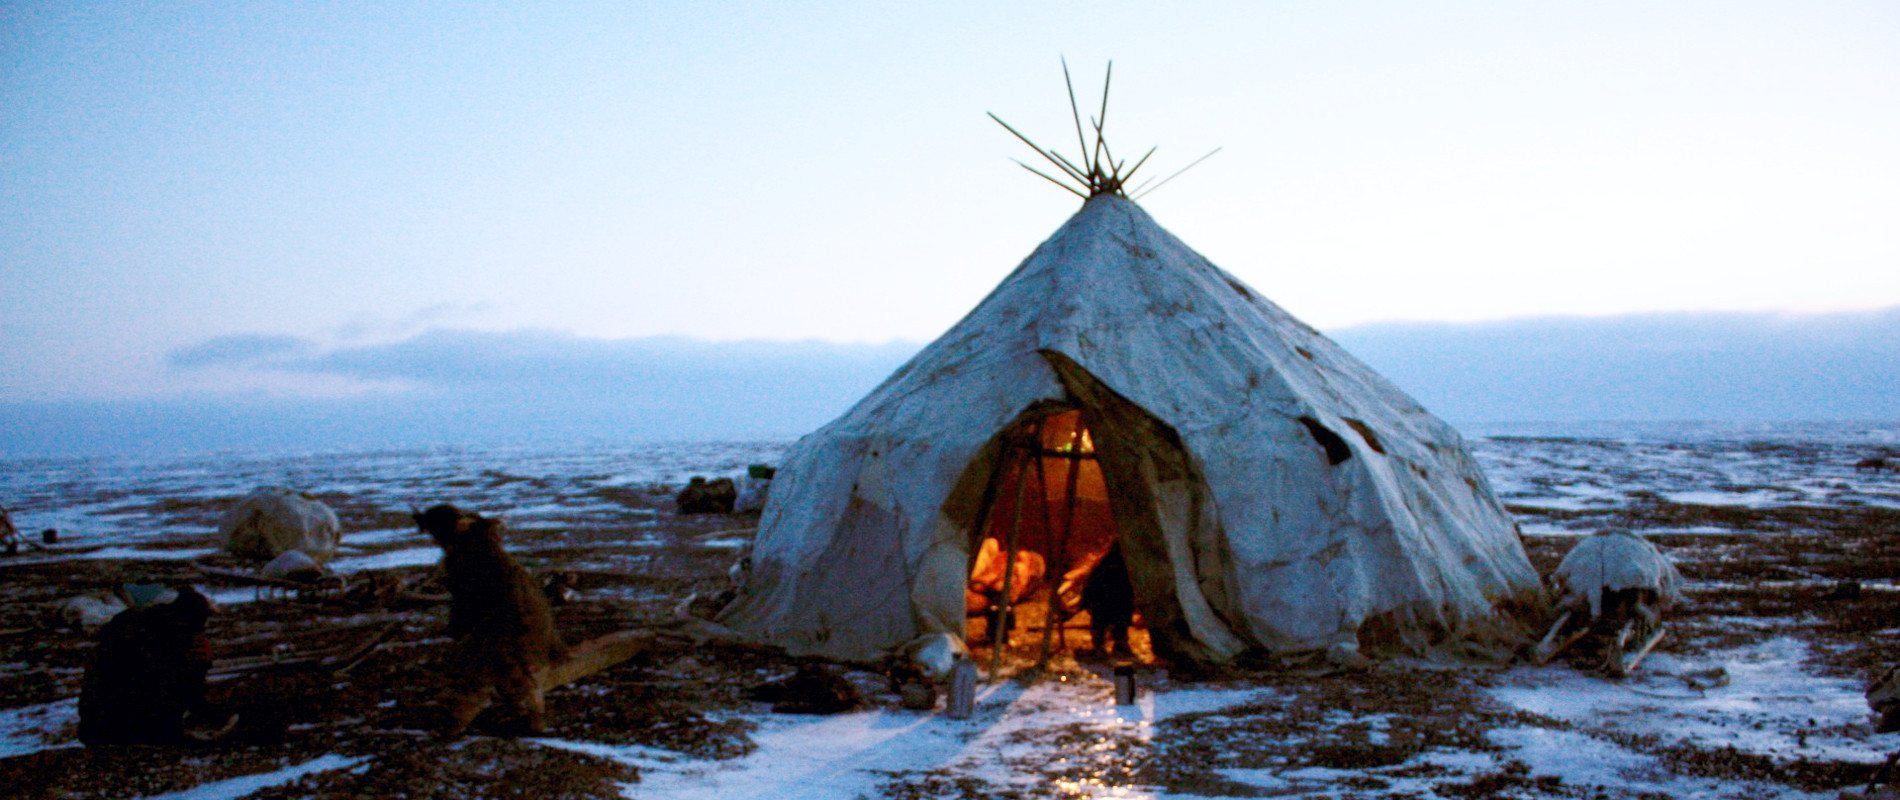 Indigenous Tent in Chukotka Autonomous Okrug, Russia